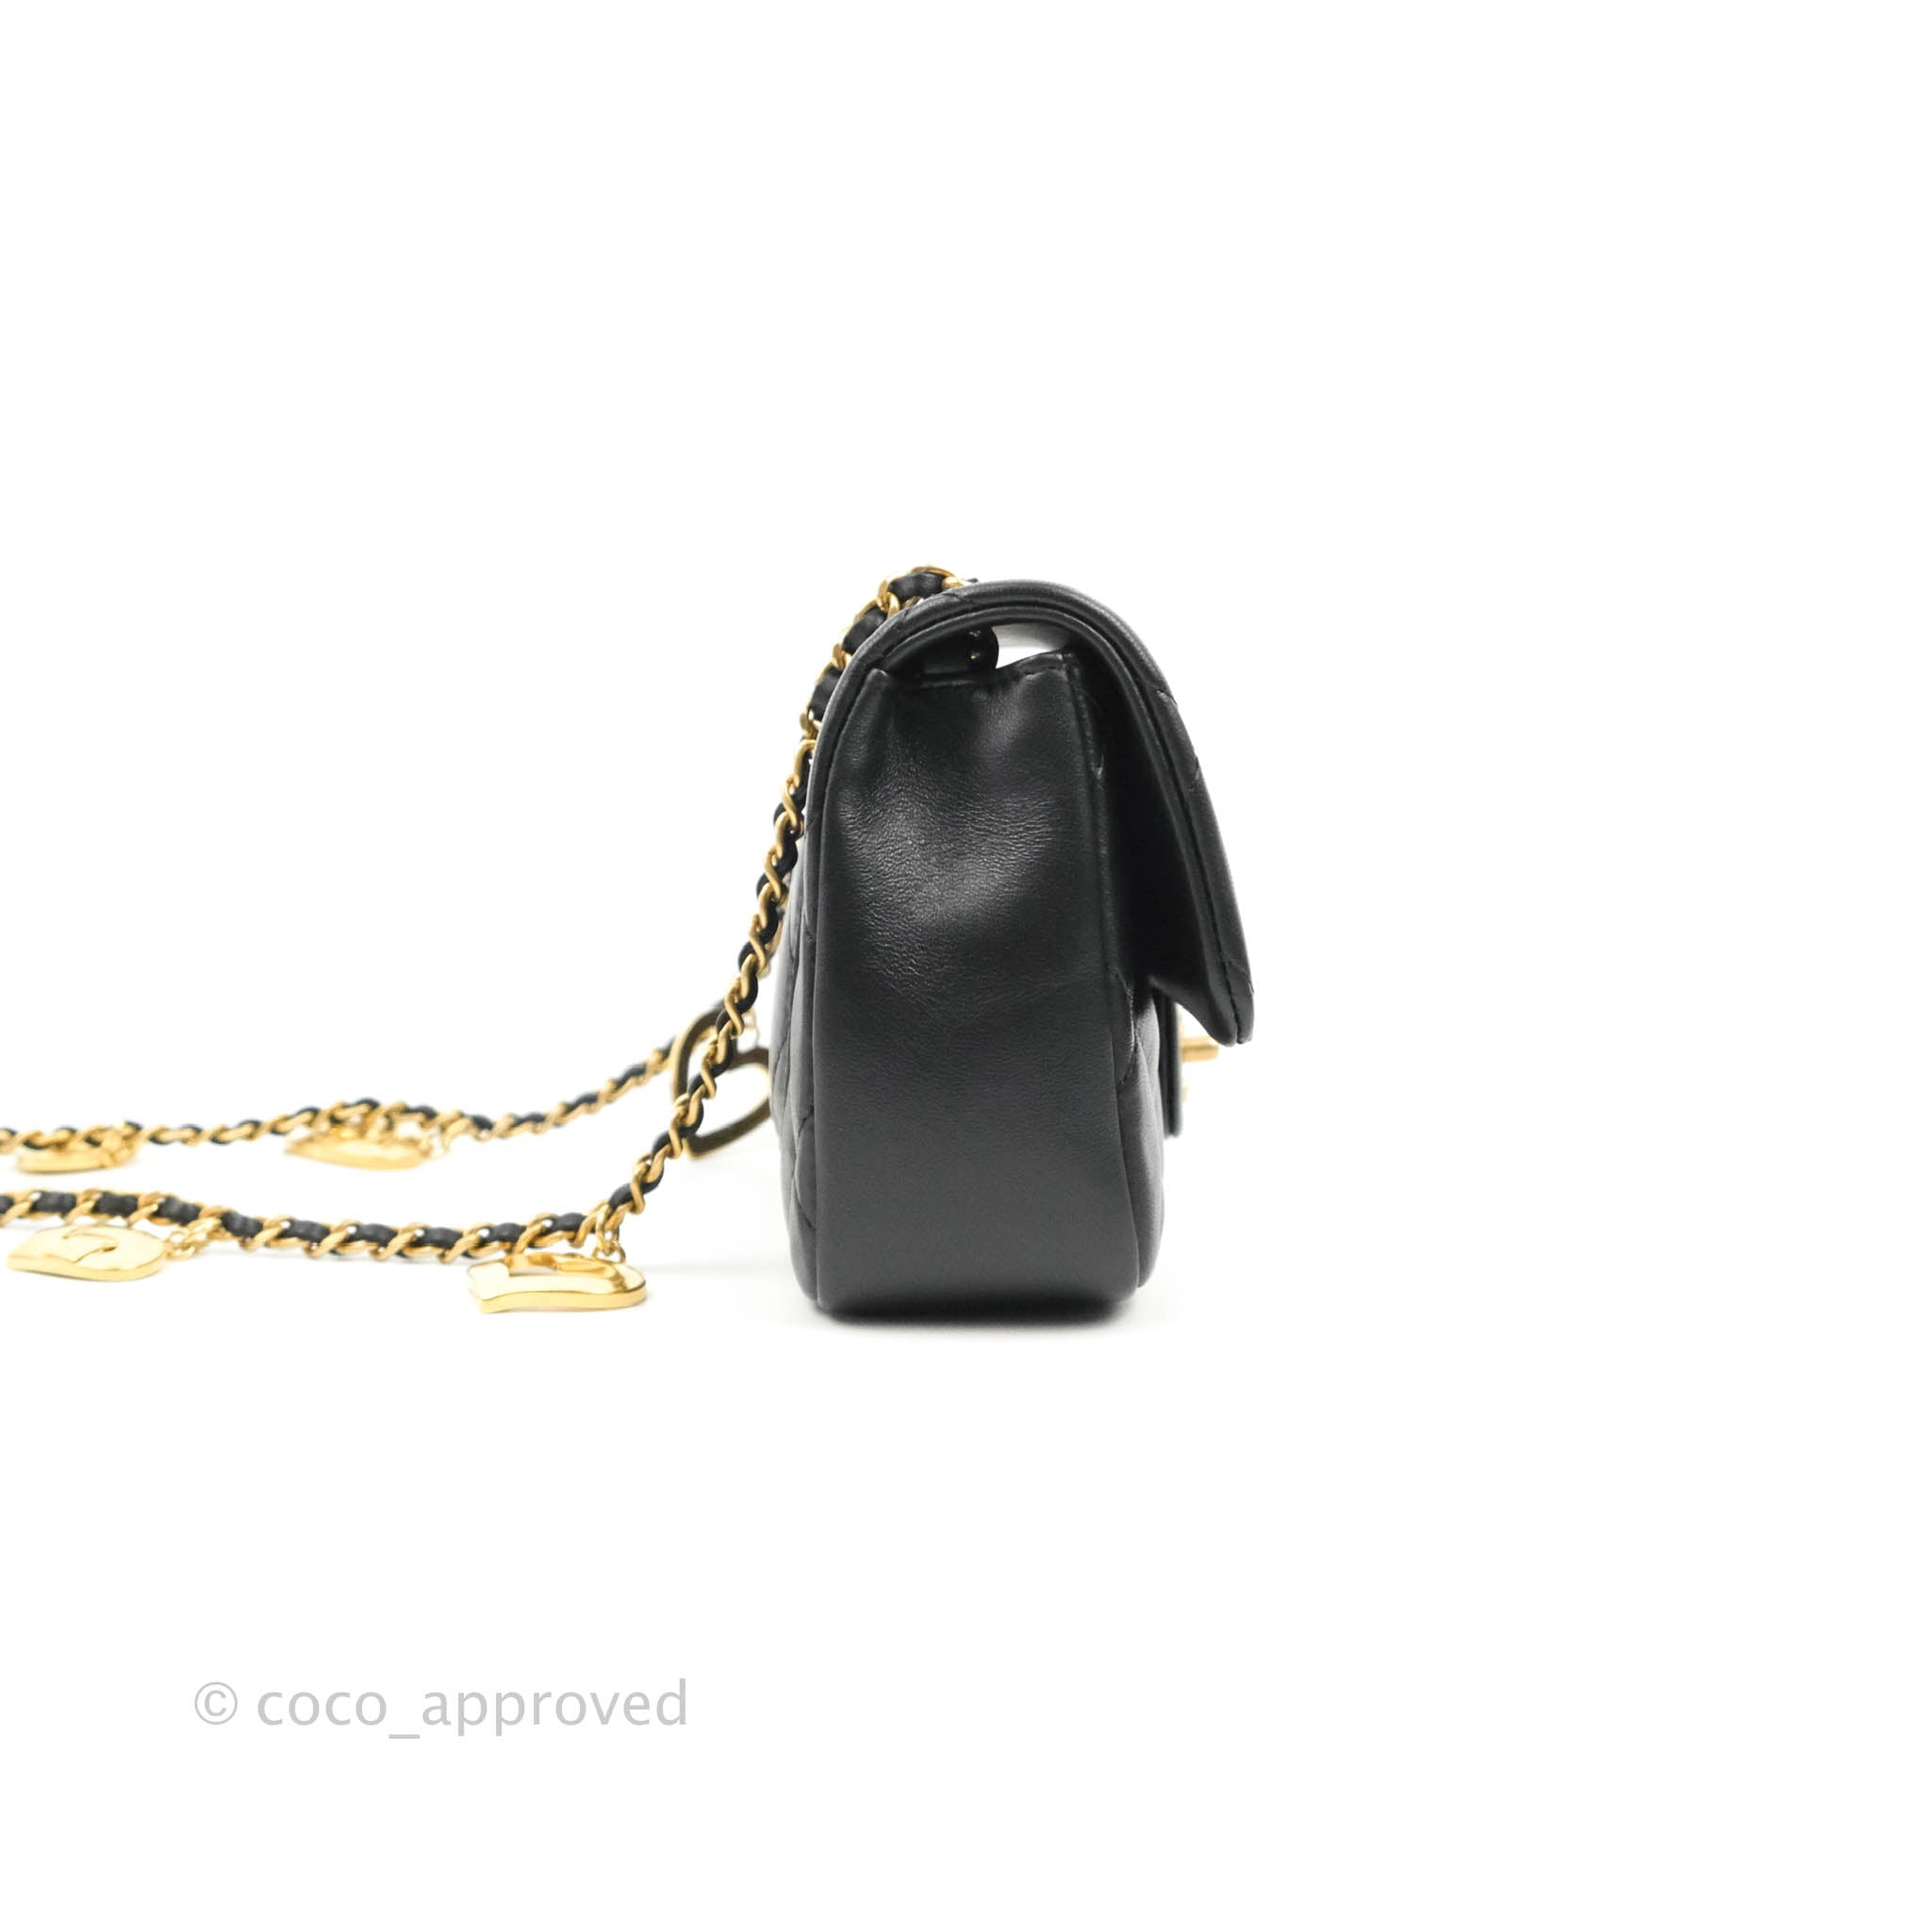 Chanel chain bag chocolate - Gem